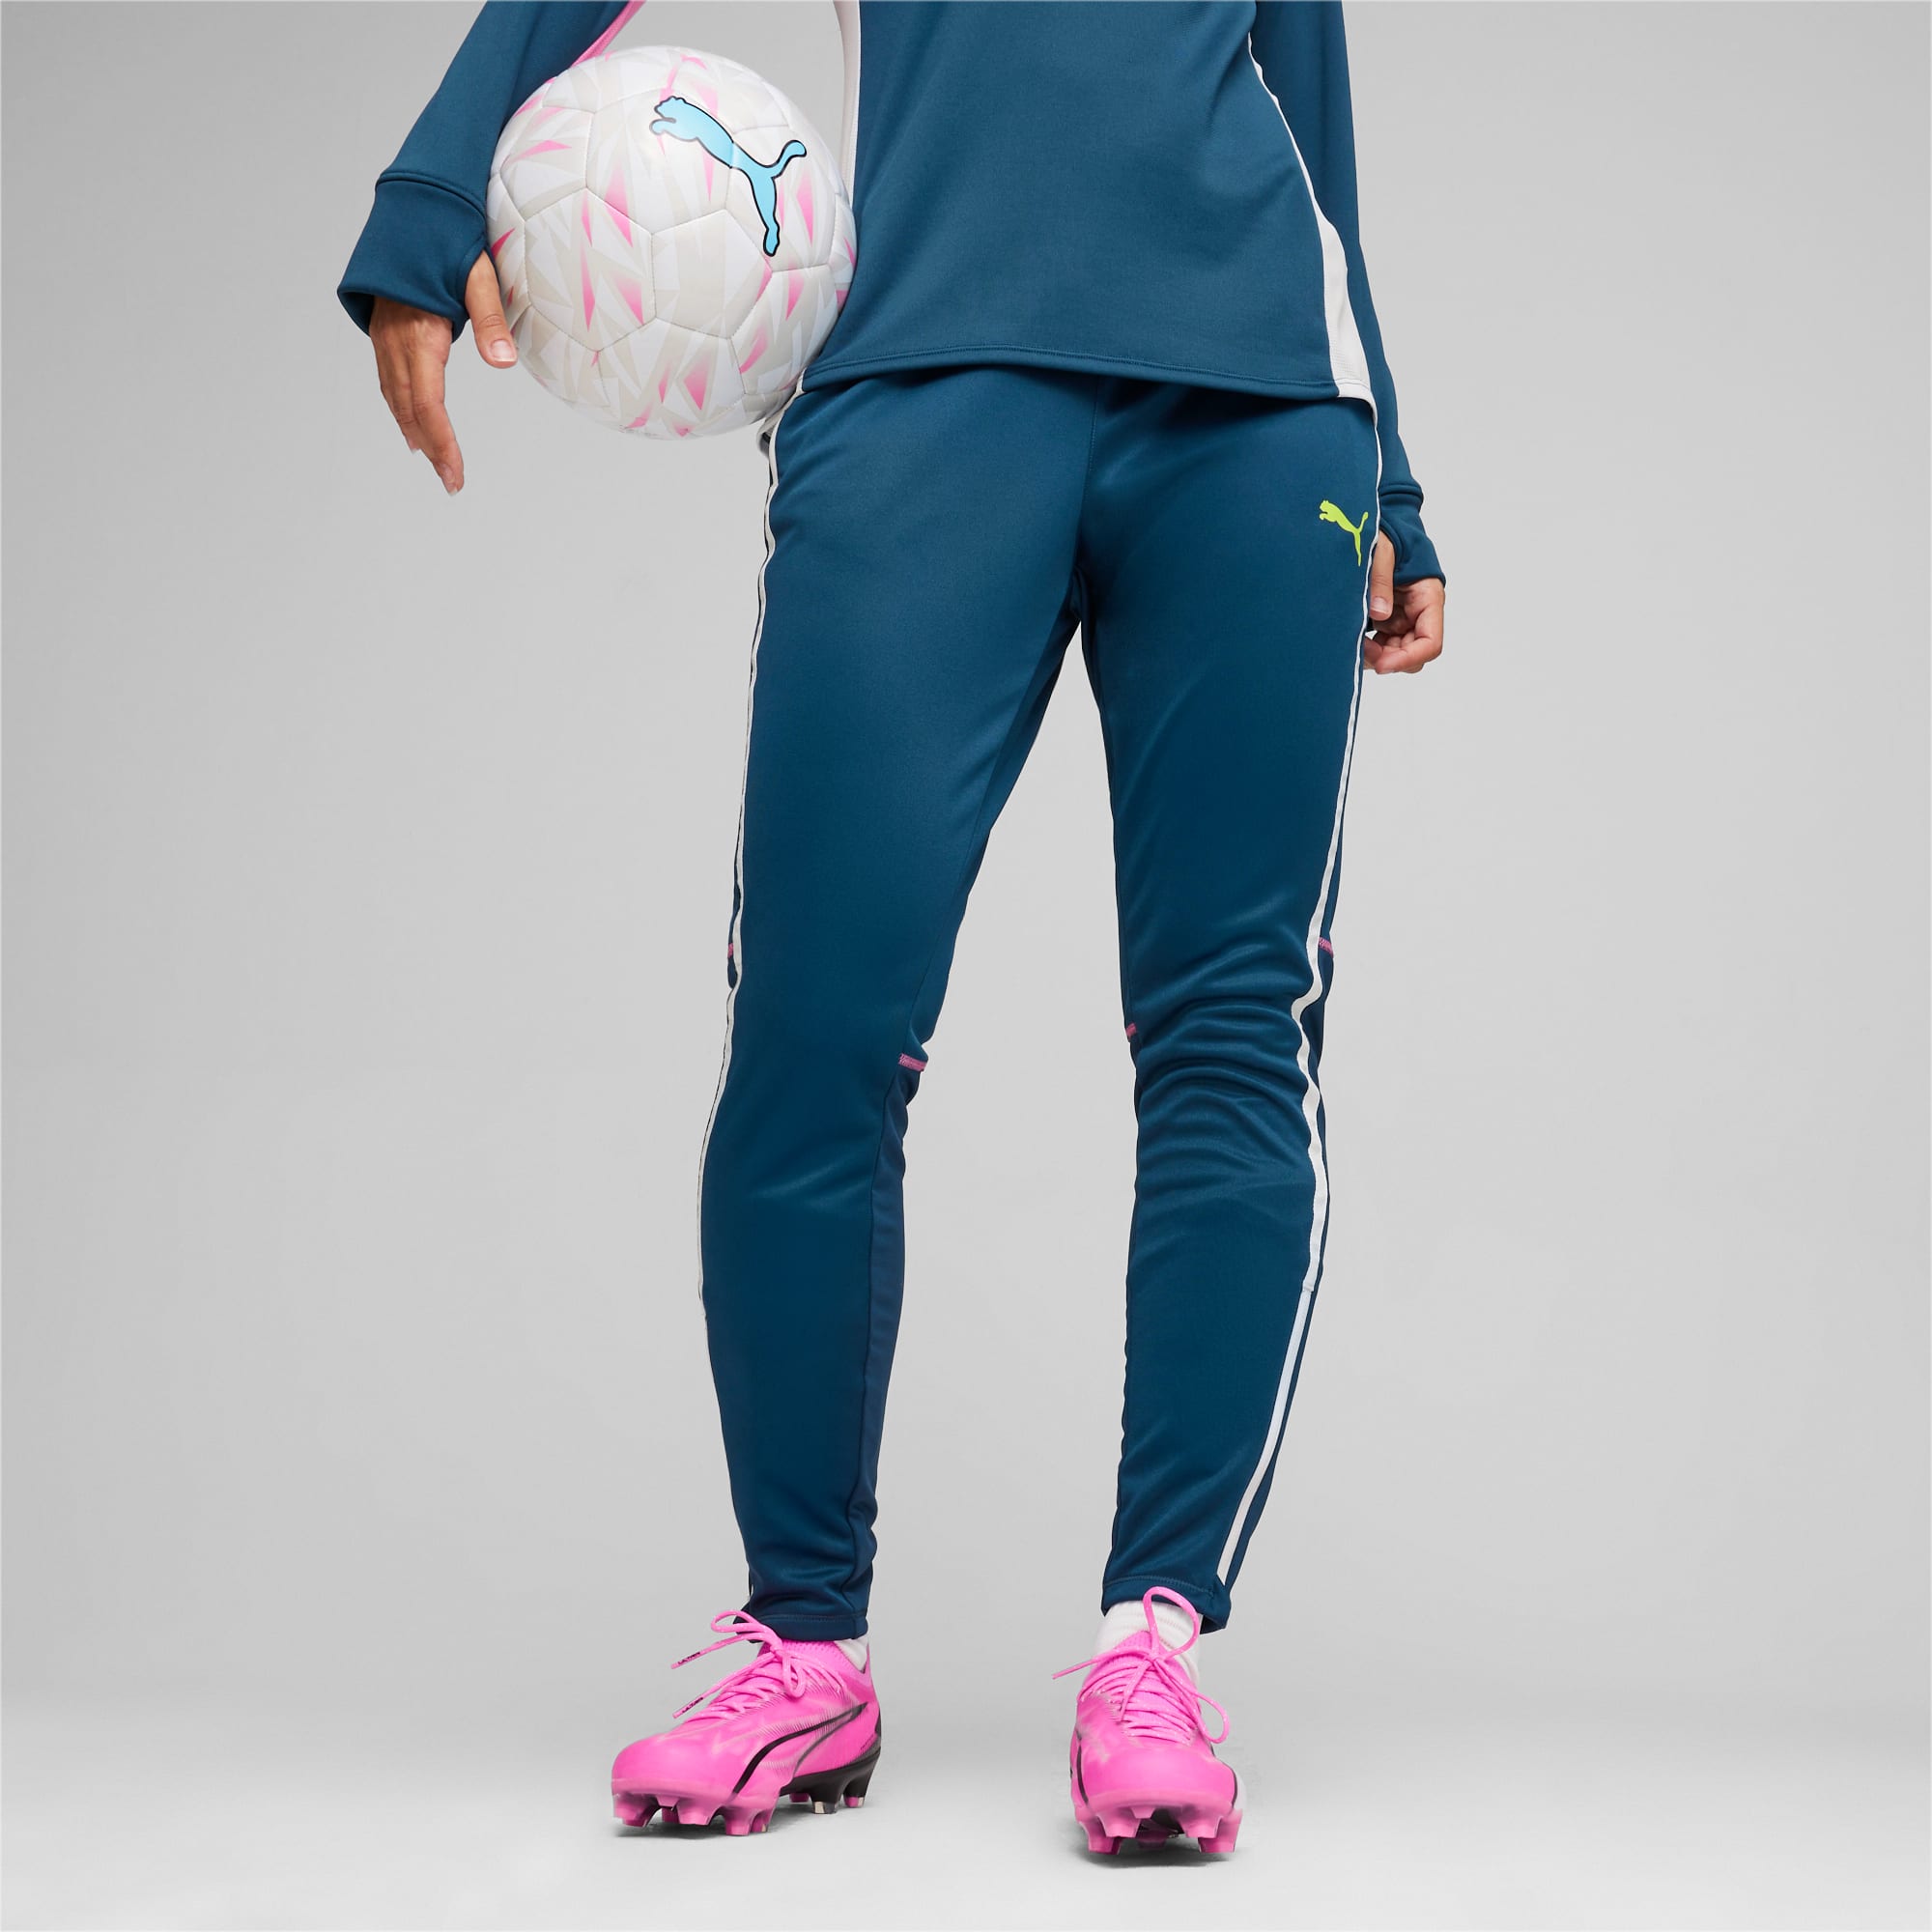 individualBLAZE Women\'s Football Training Pants | | PUMA green